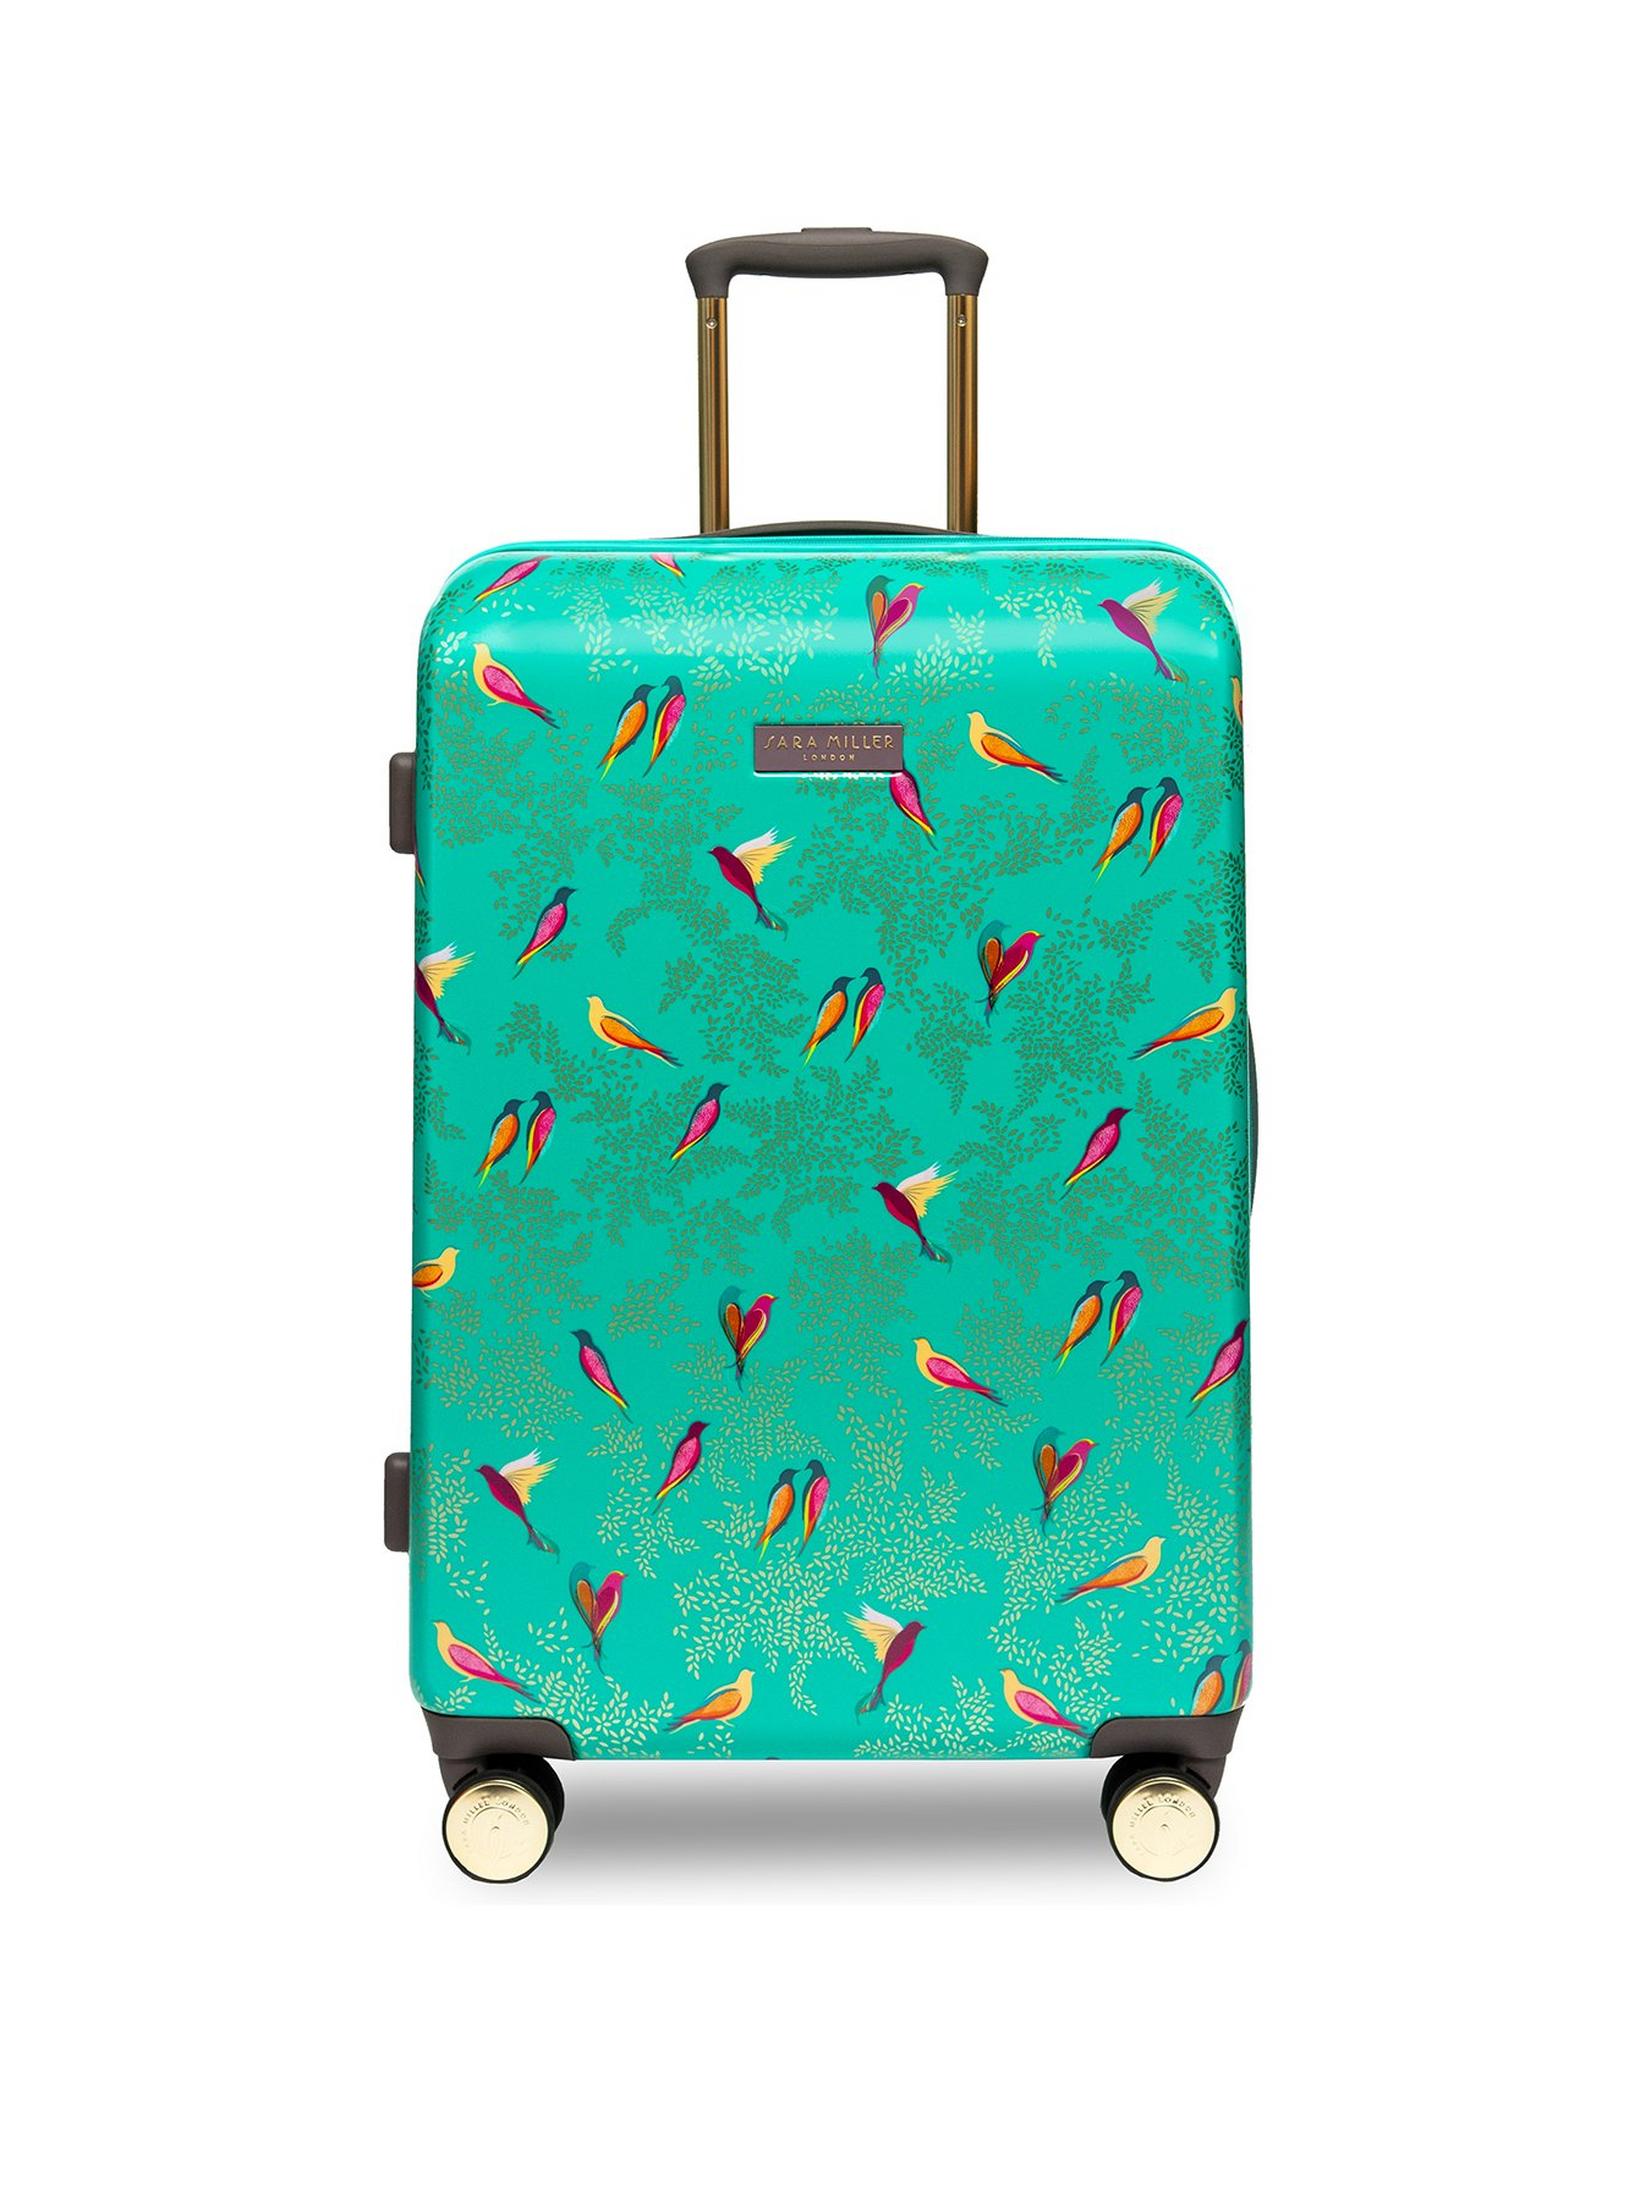 Medium 4-Wheel Trolley Suitcase Green Birds